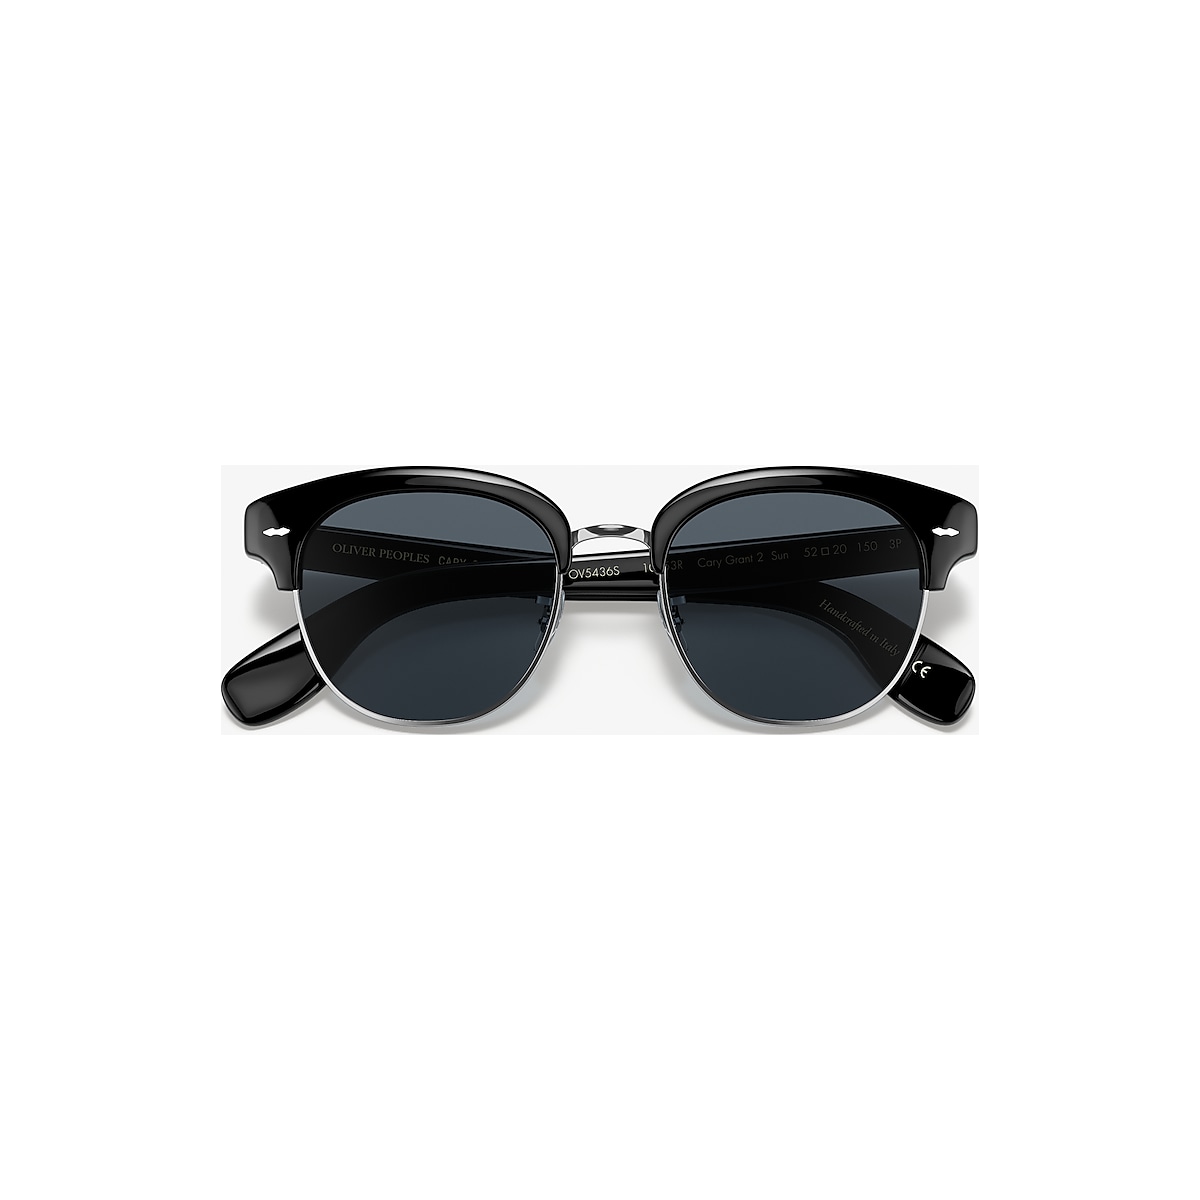 Oliver Peoples OV5436S Cary Grant 2 Sun 52 Blue Polar & Black Polarized  Sunglasses | Sunglass Hut USA